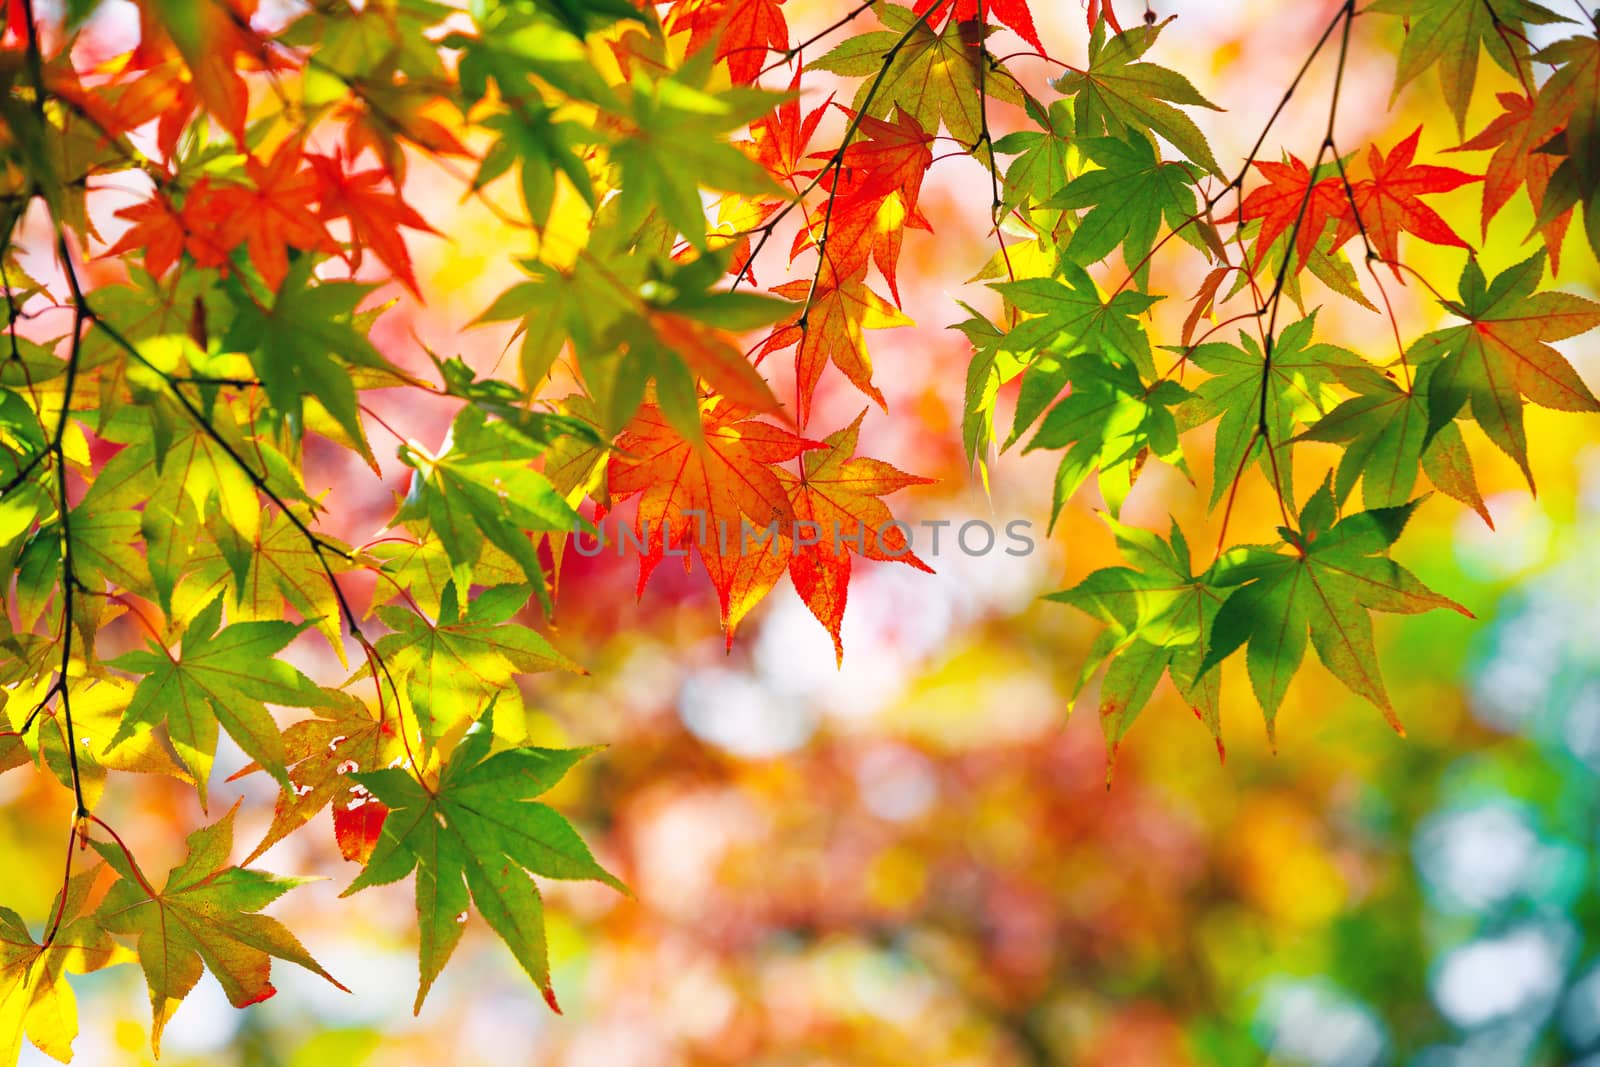 Colorful japanese maple leaves during momiji season at Kinkakuji garden, Kyoto, Japan by zhu_zhu